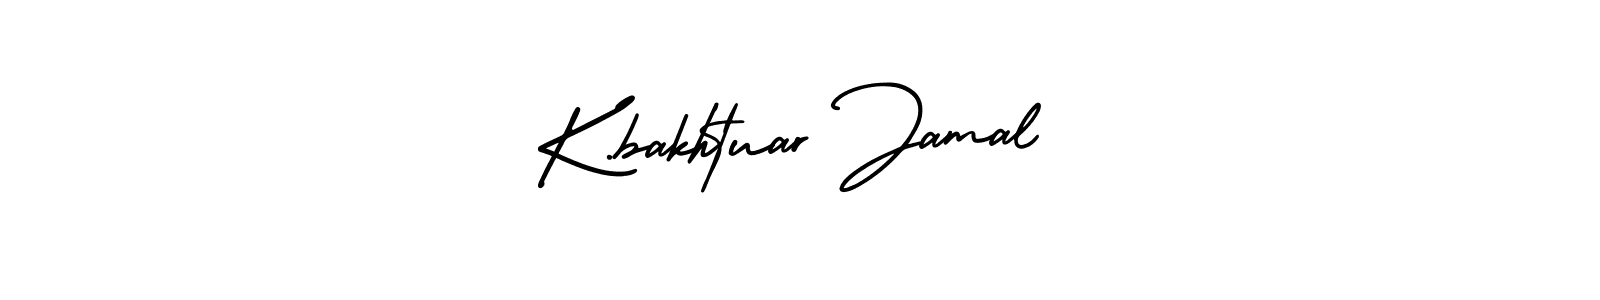 84+ K.bakhtuar Jamal Name Signature Style Ideas | Excellent Name Signature